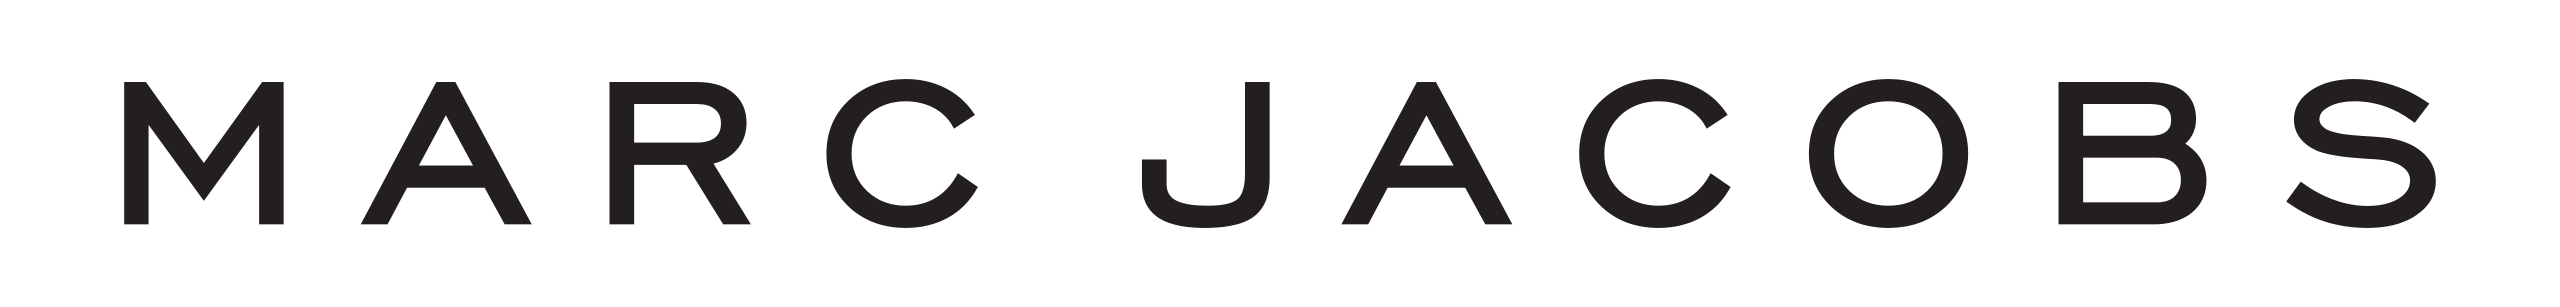 Marc Jacobs logo.svg